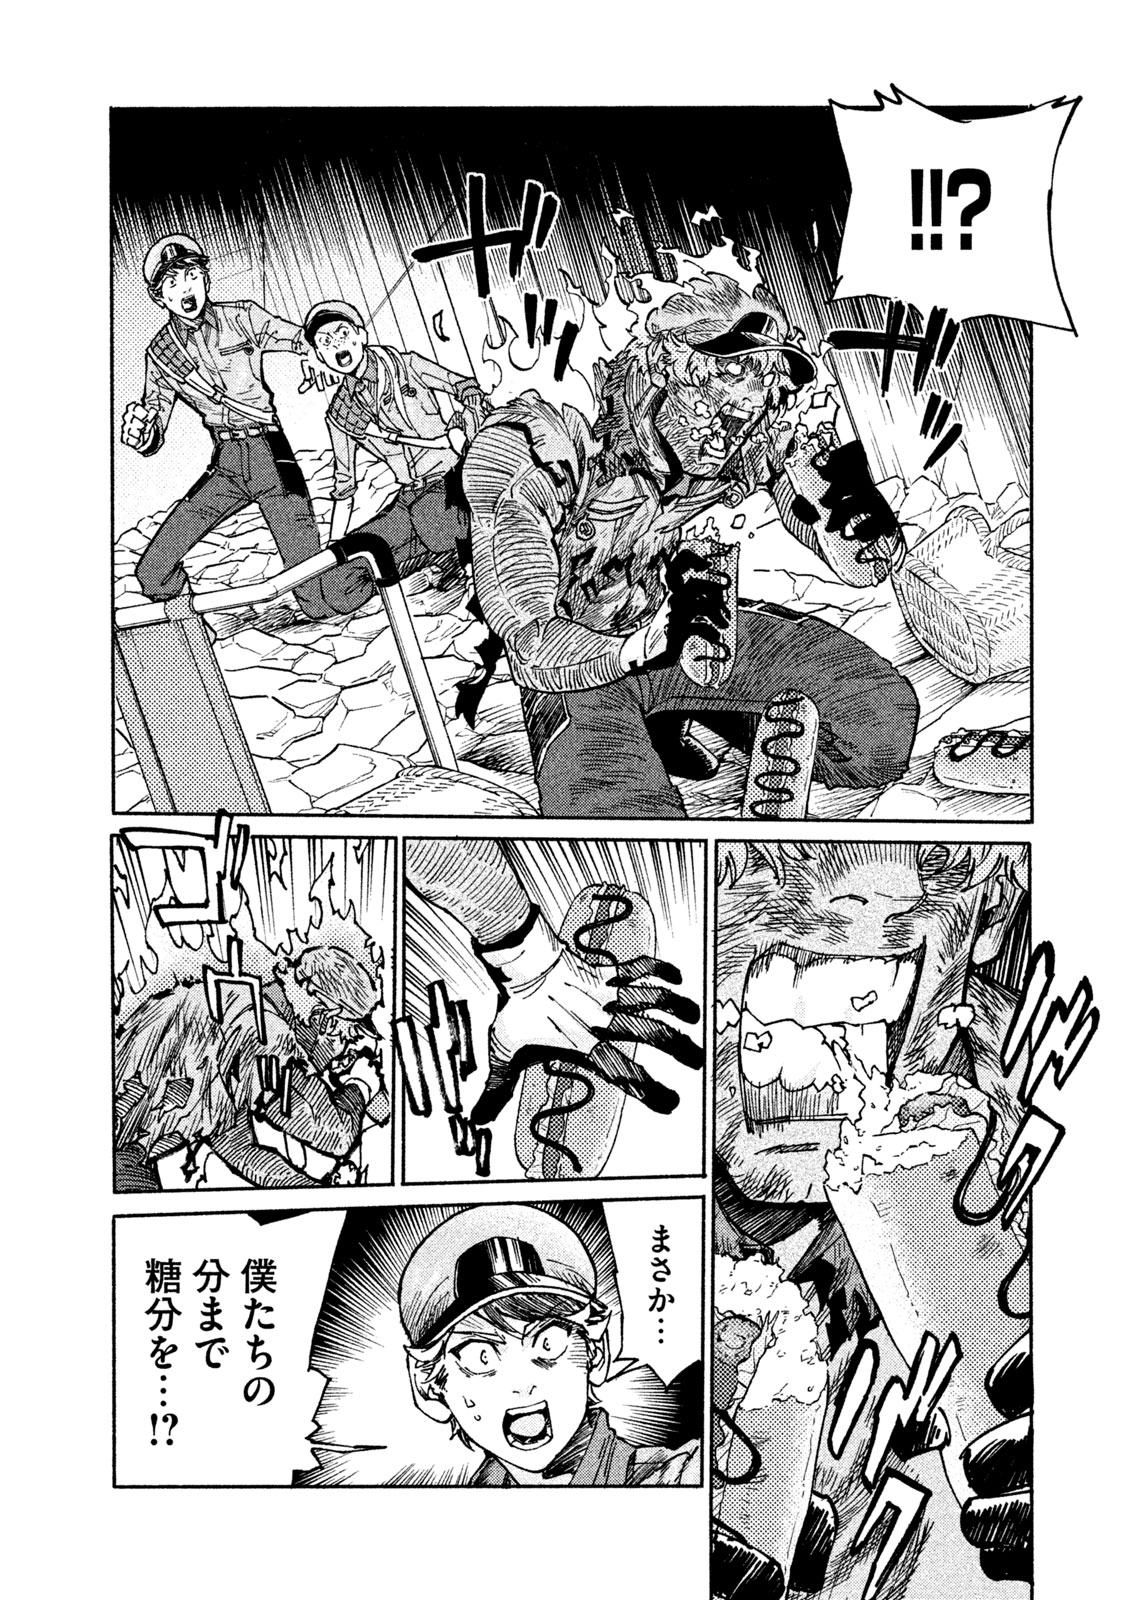 Hataraku Saibou BLACK - Chapter 25 - Page 8